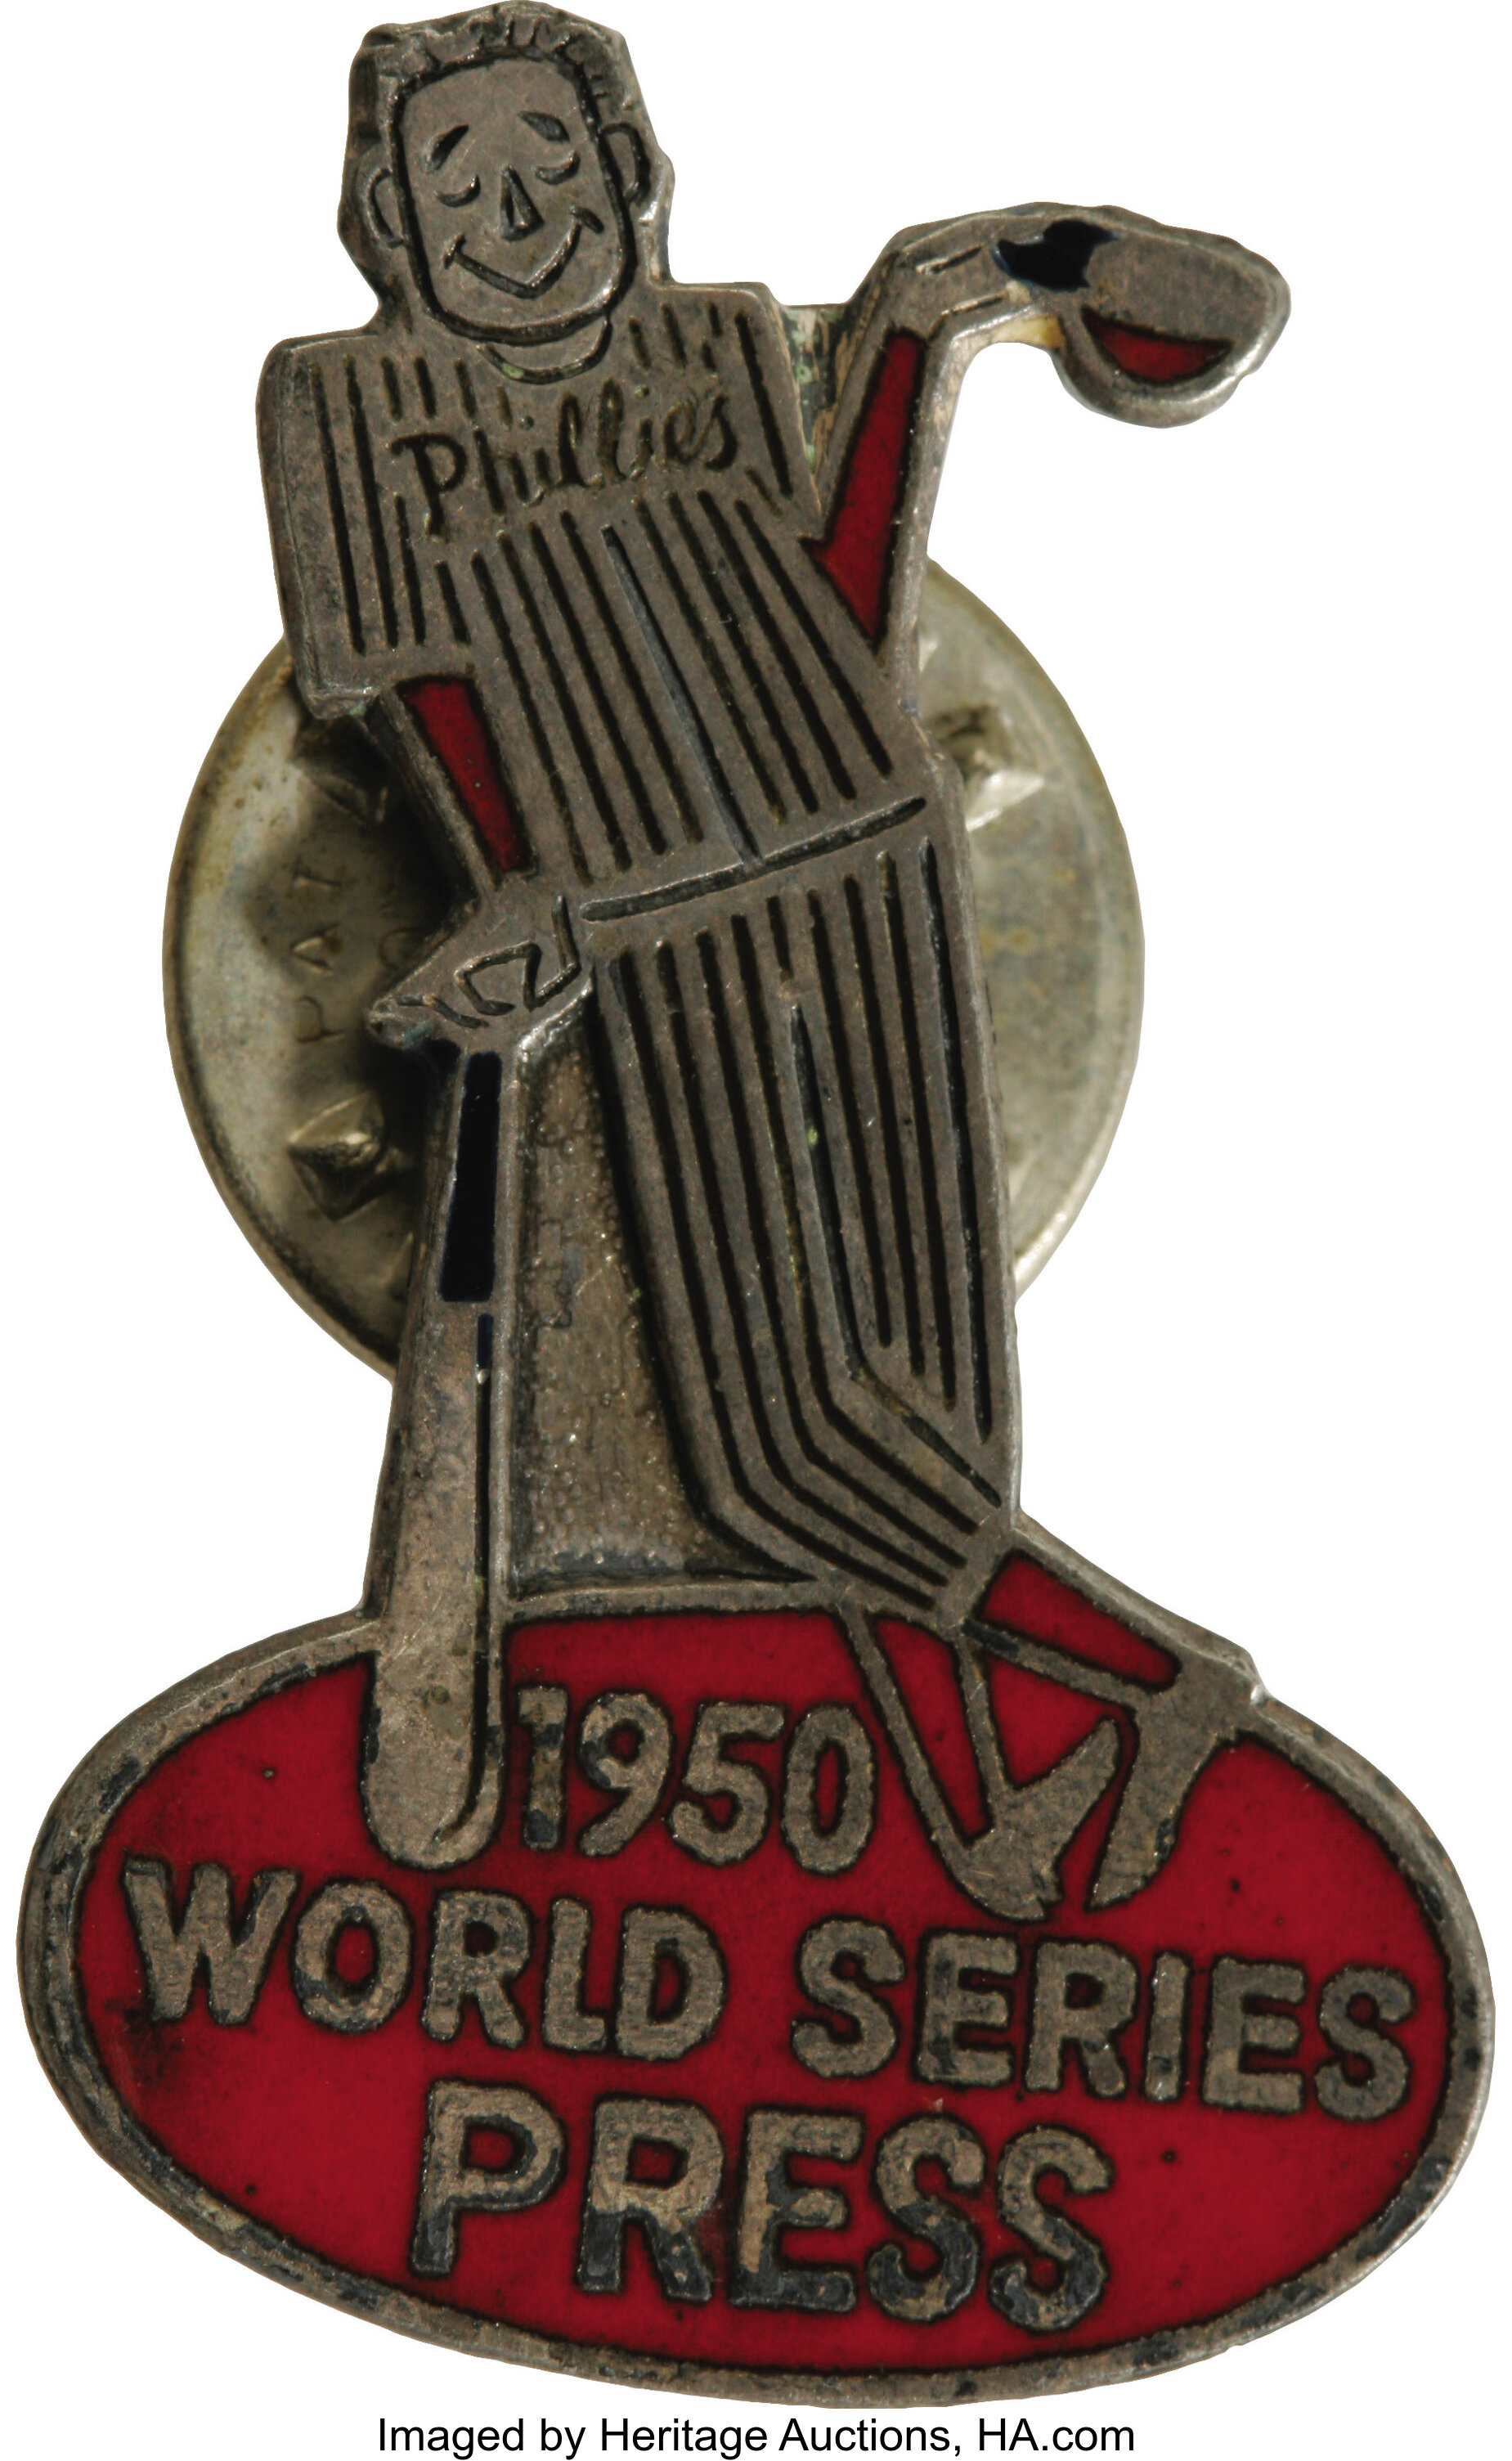 1950 World Series (Philadelphia Phillies) Press Pin. The fabulous